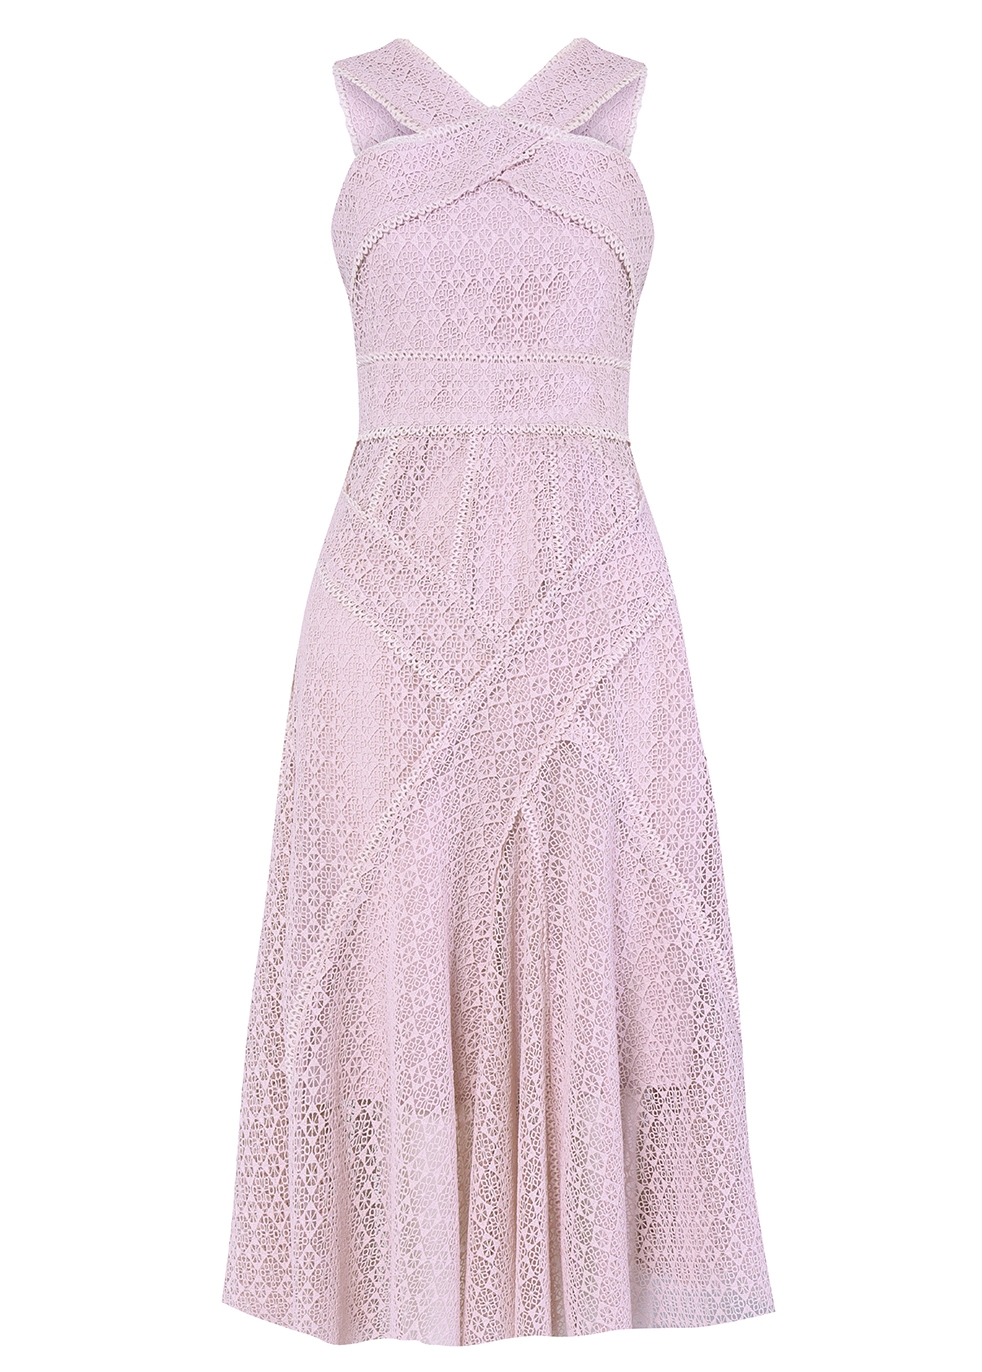 lilac lace midi dress